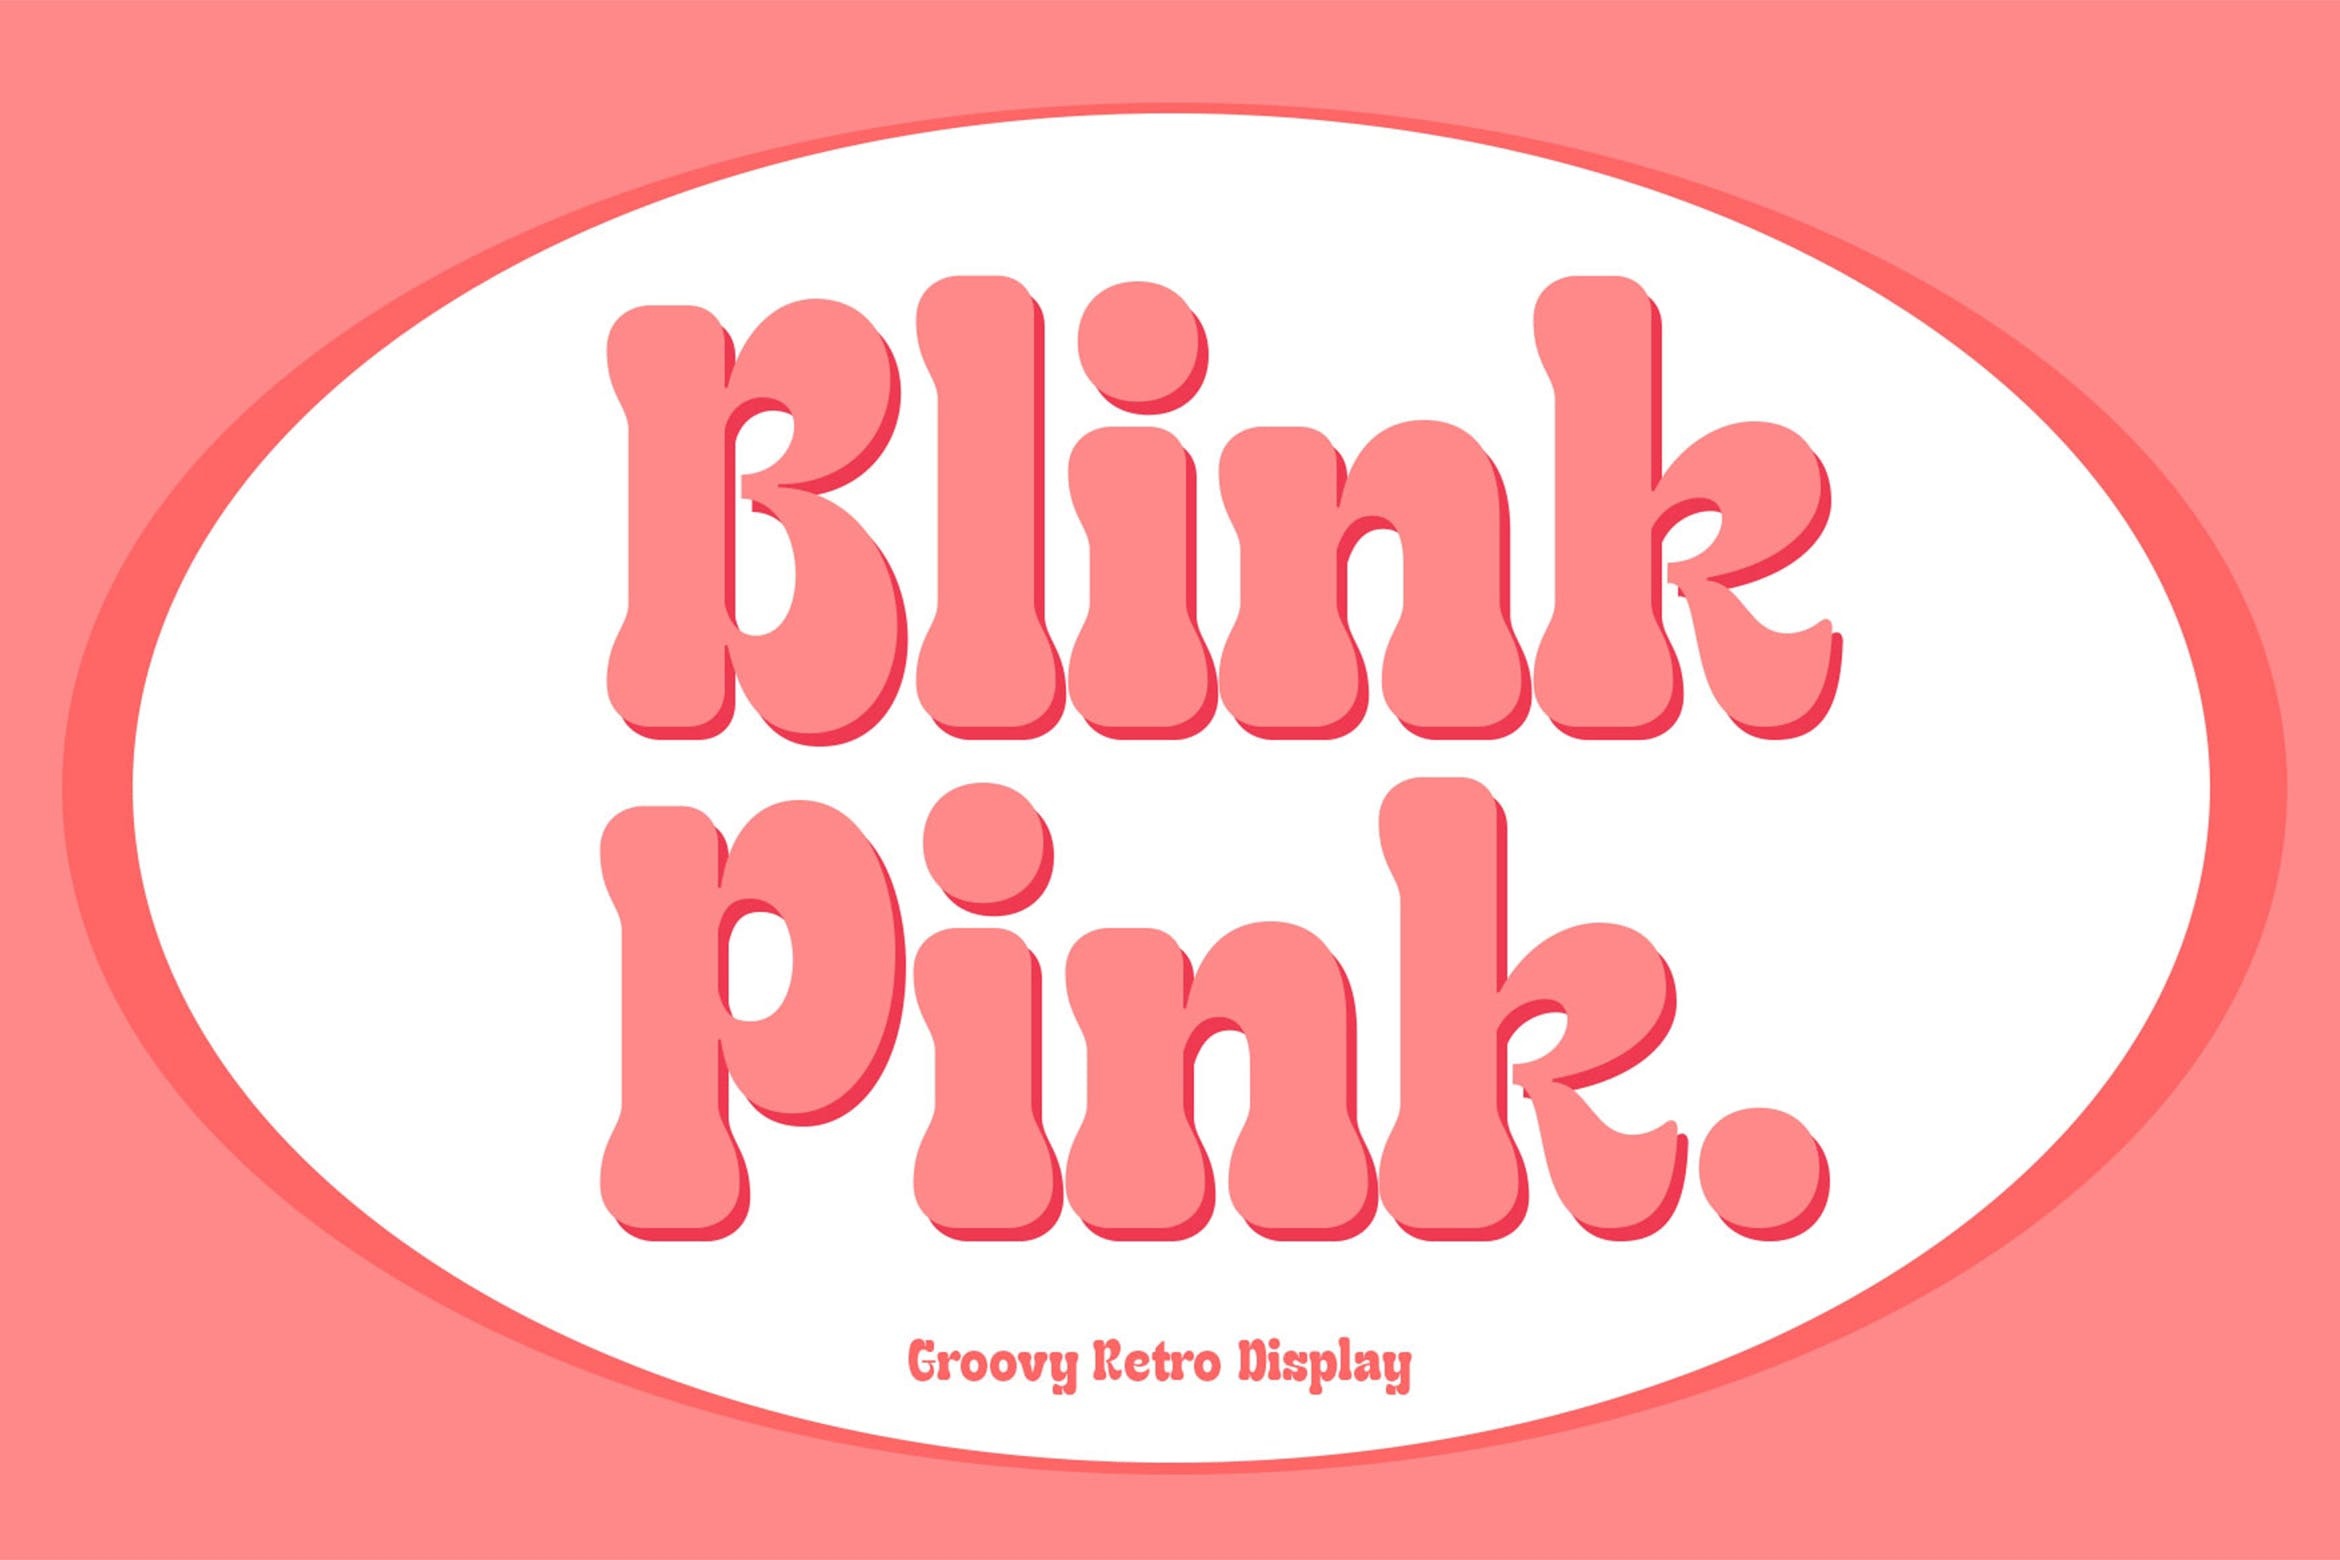 Blink Ping